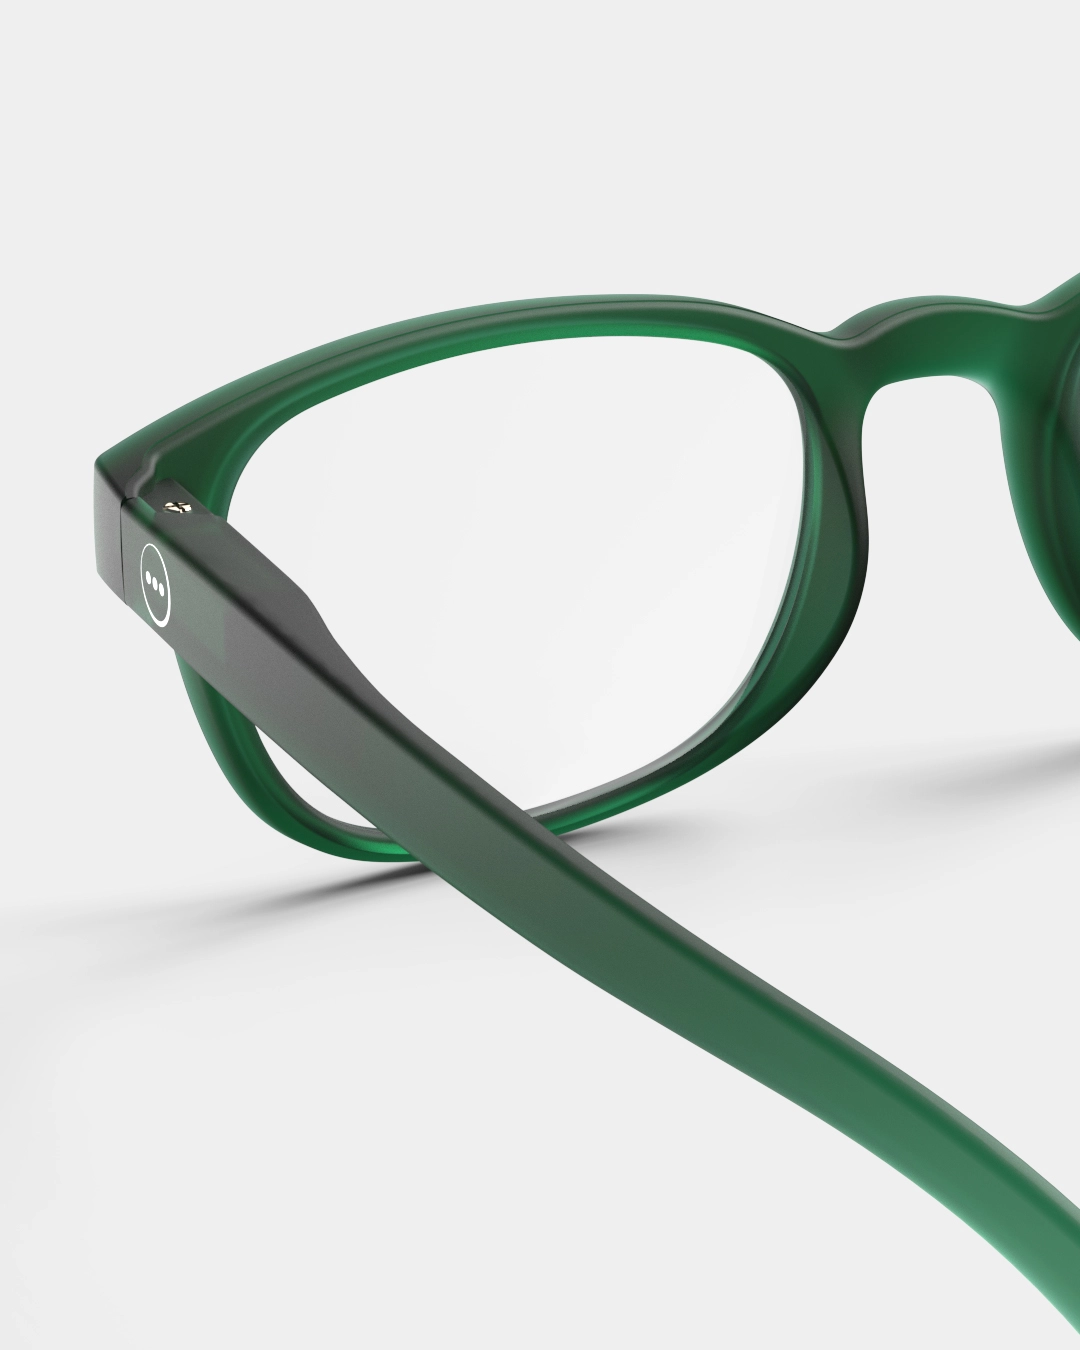 IZIPIZI #B Green Reading Glasses